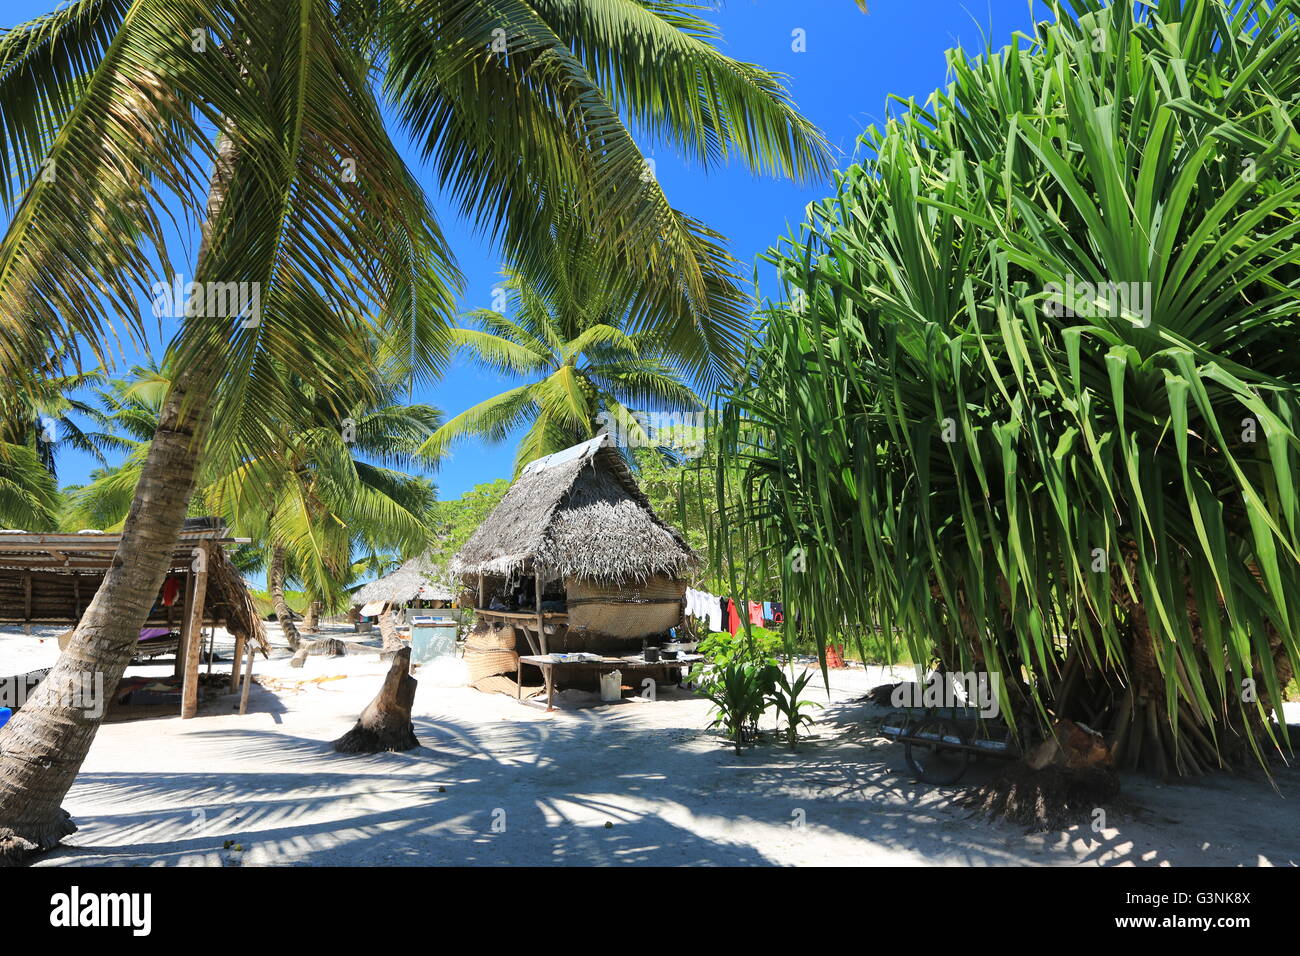 Choza hecha de palmera de coco en el municipio, la isla de Christmas, Kiribati Foto de stock